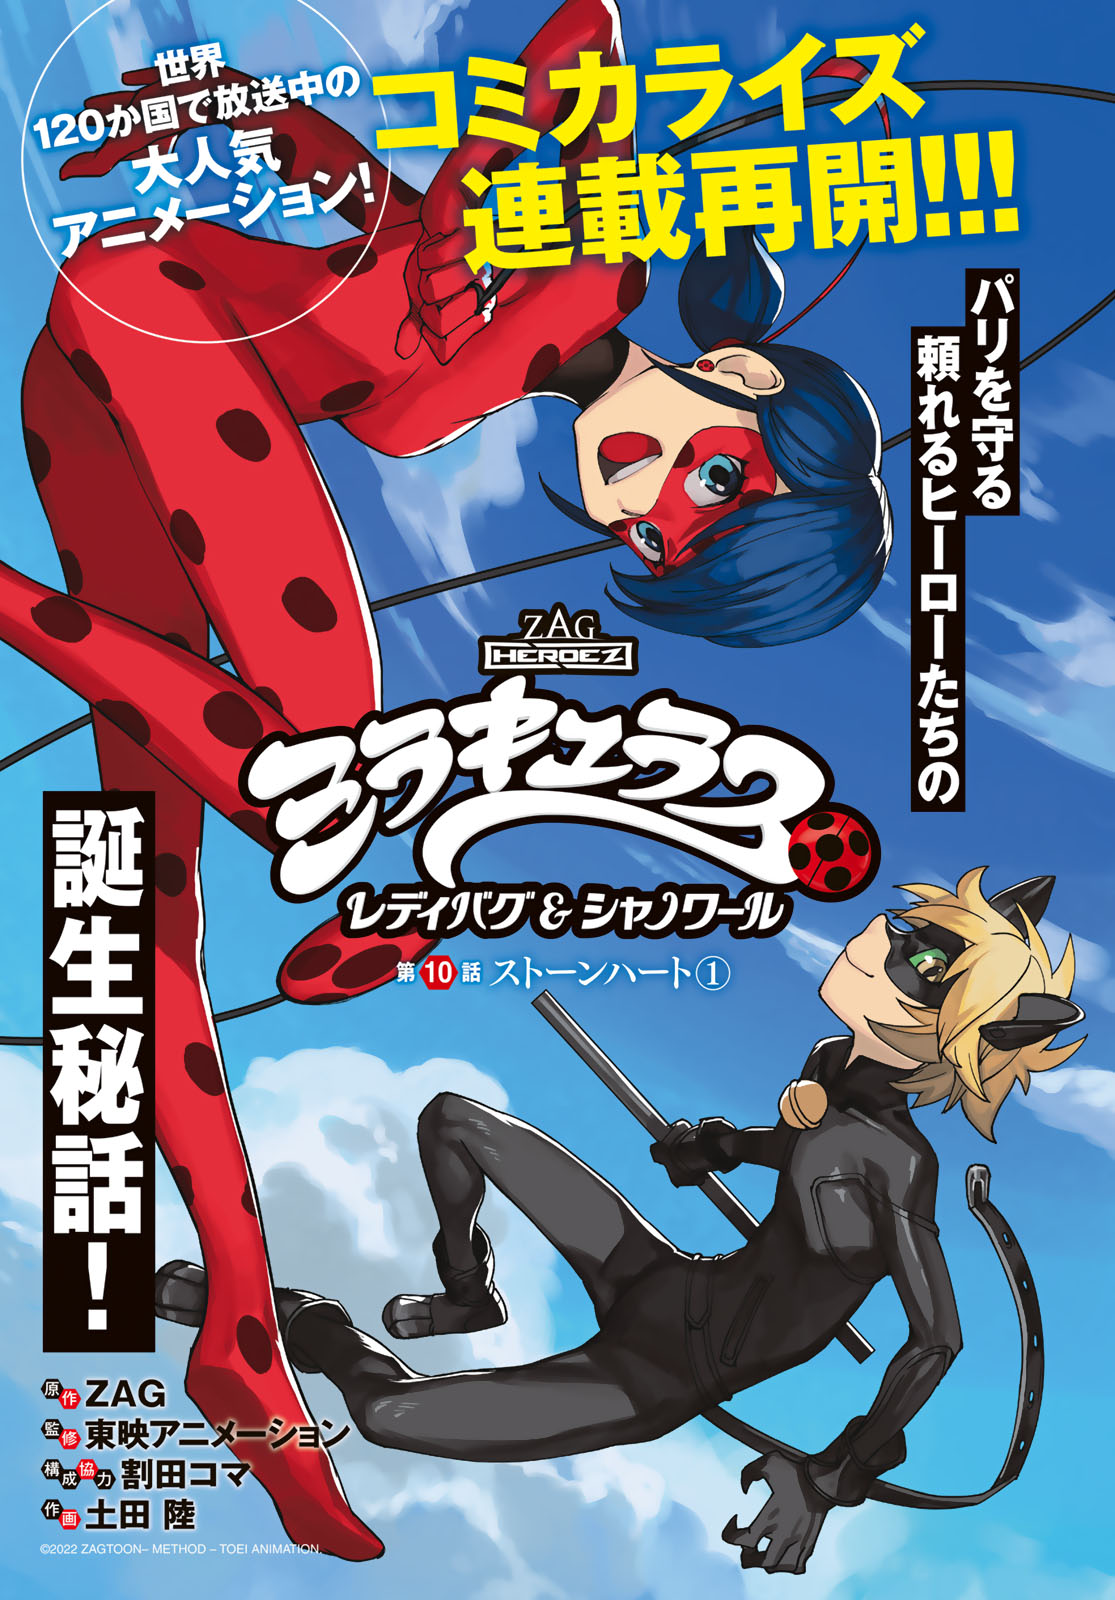 Miraculous: Tales of Ladybug & Cat Noir (Manga) 1|Paperback